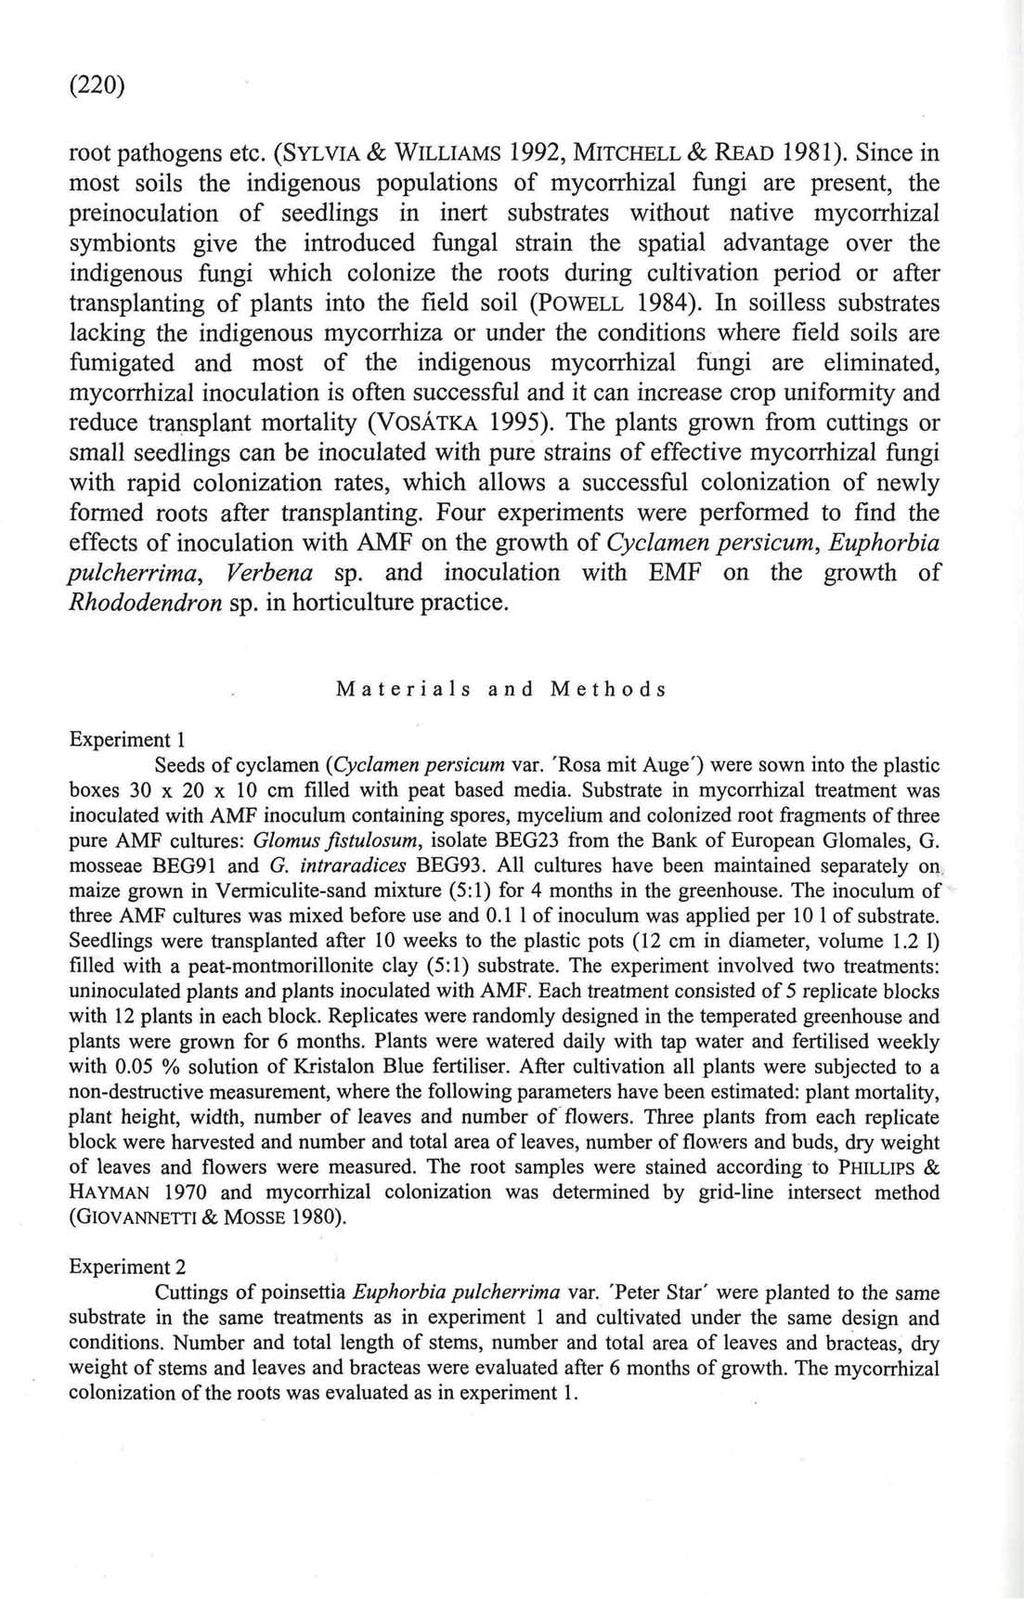 (220) root pathogens etc. (SYLVIA & WILLIAMS 1992, MITCHELL & READ 1981).